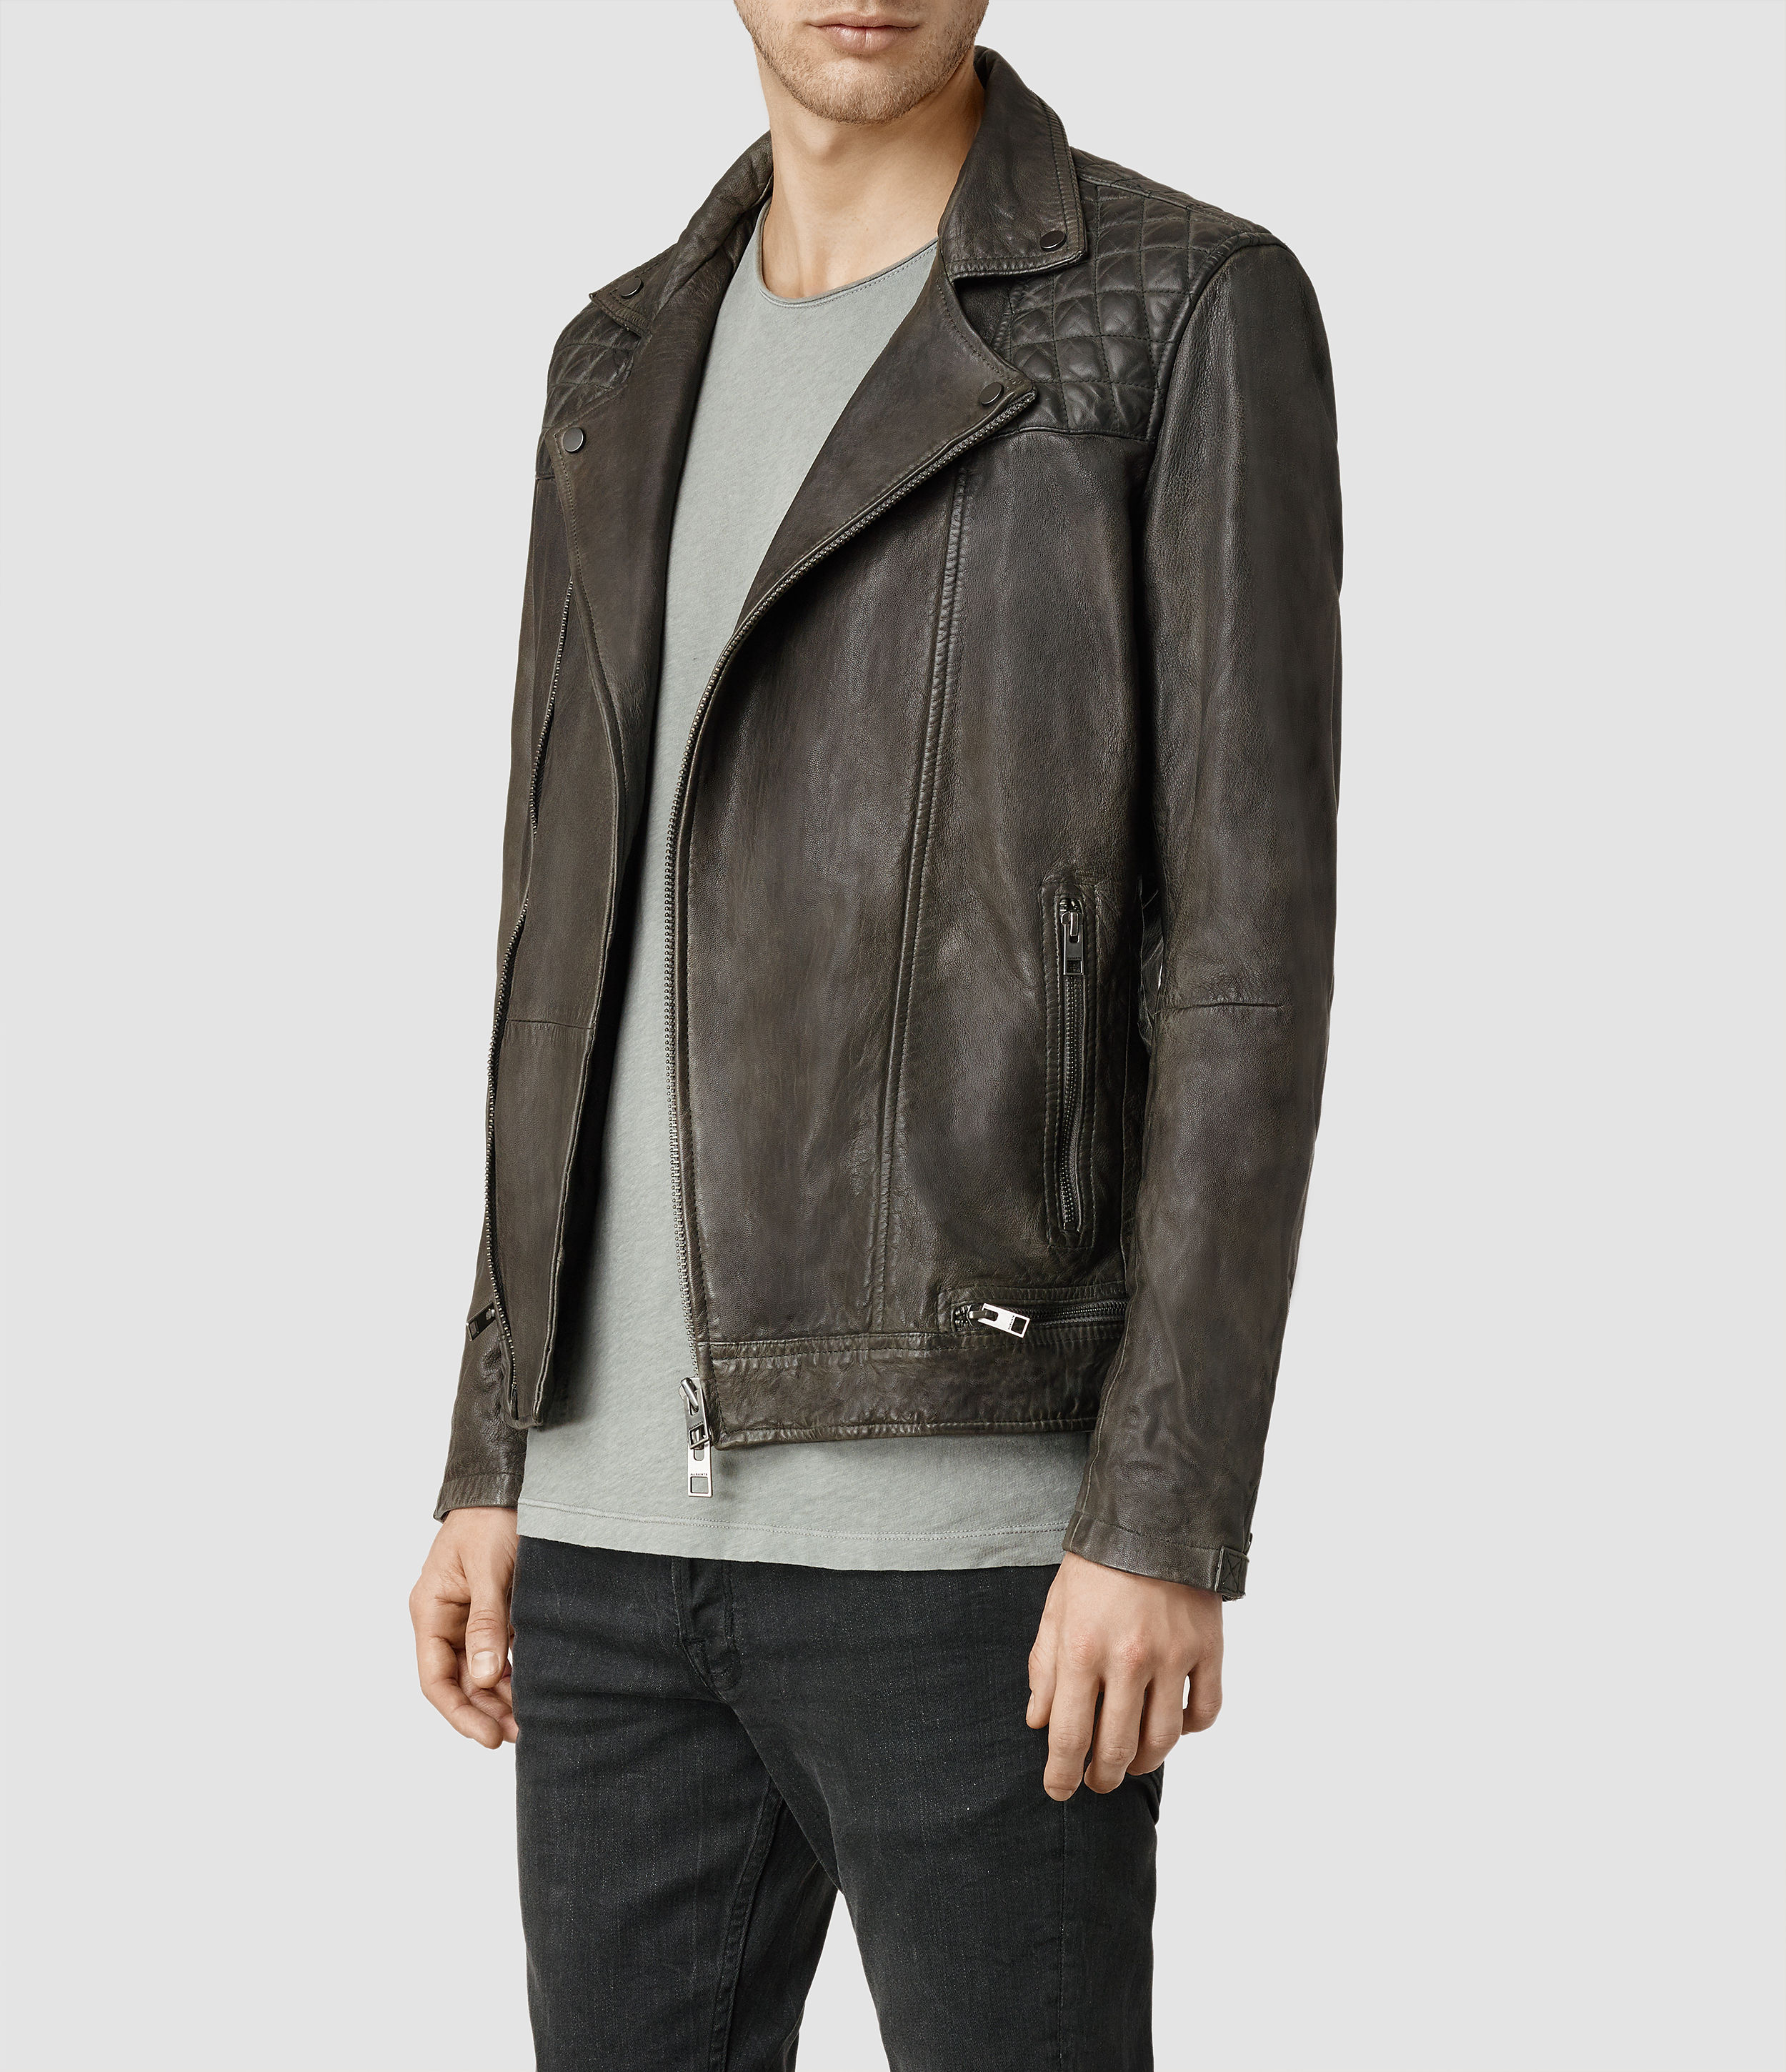 Lyst - Allsaints Conroy Leather Biker Jacket in Gray for Men